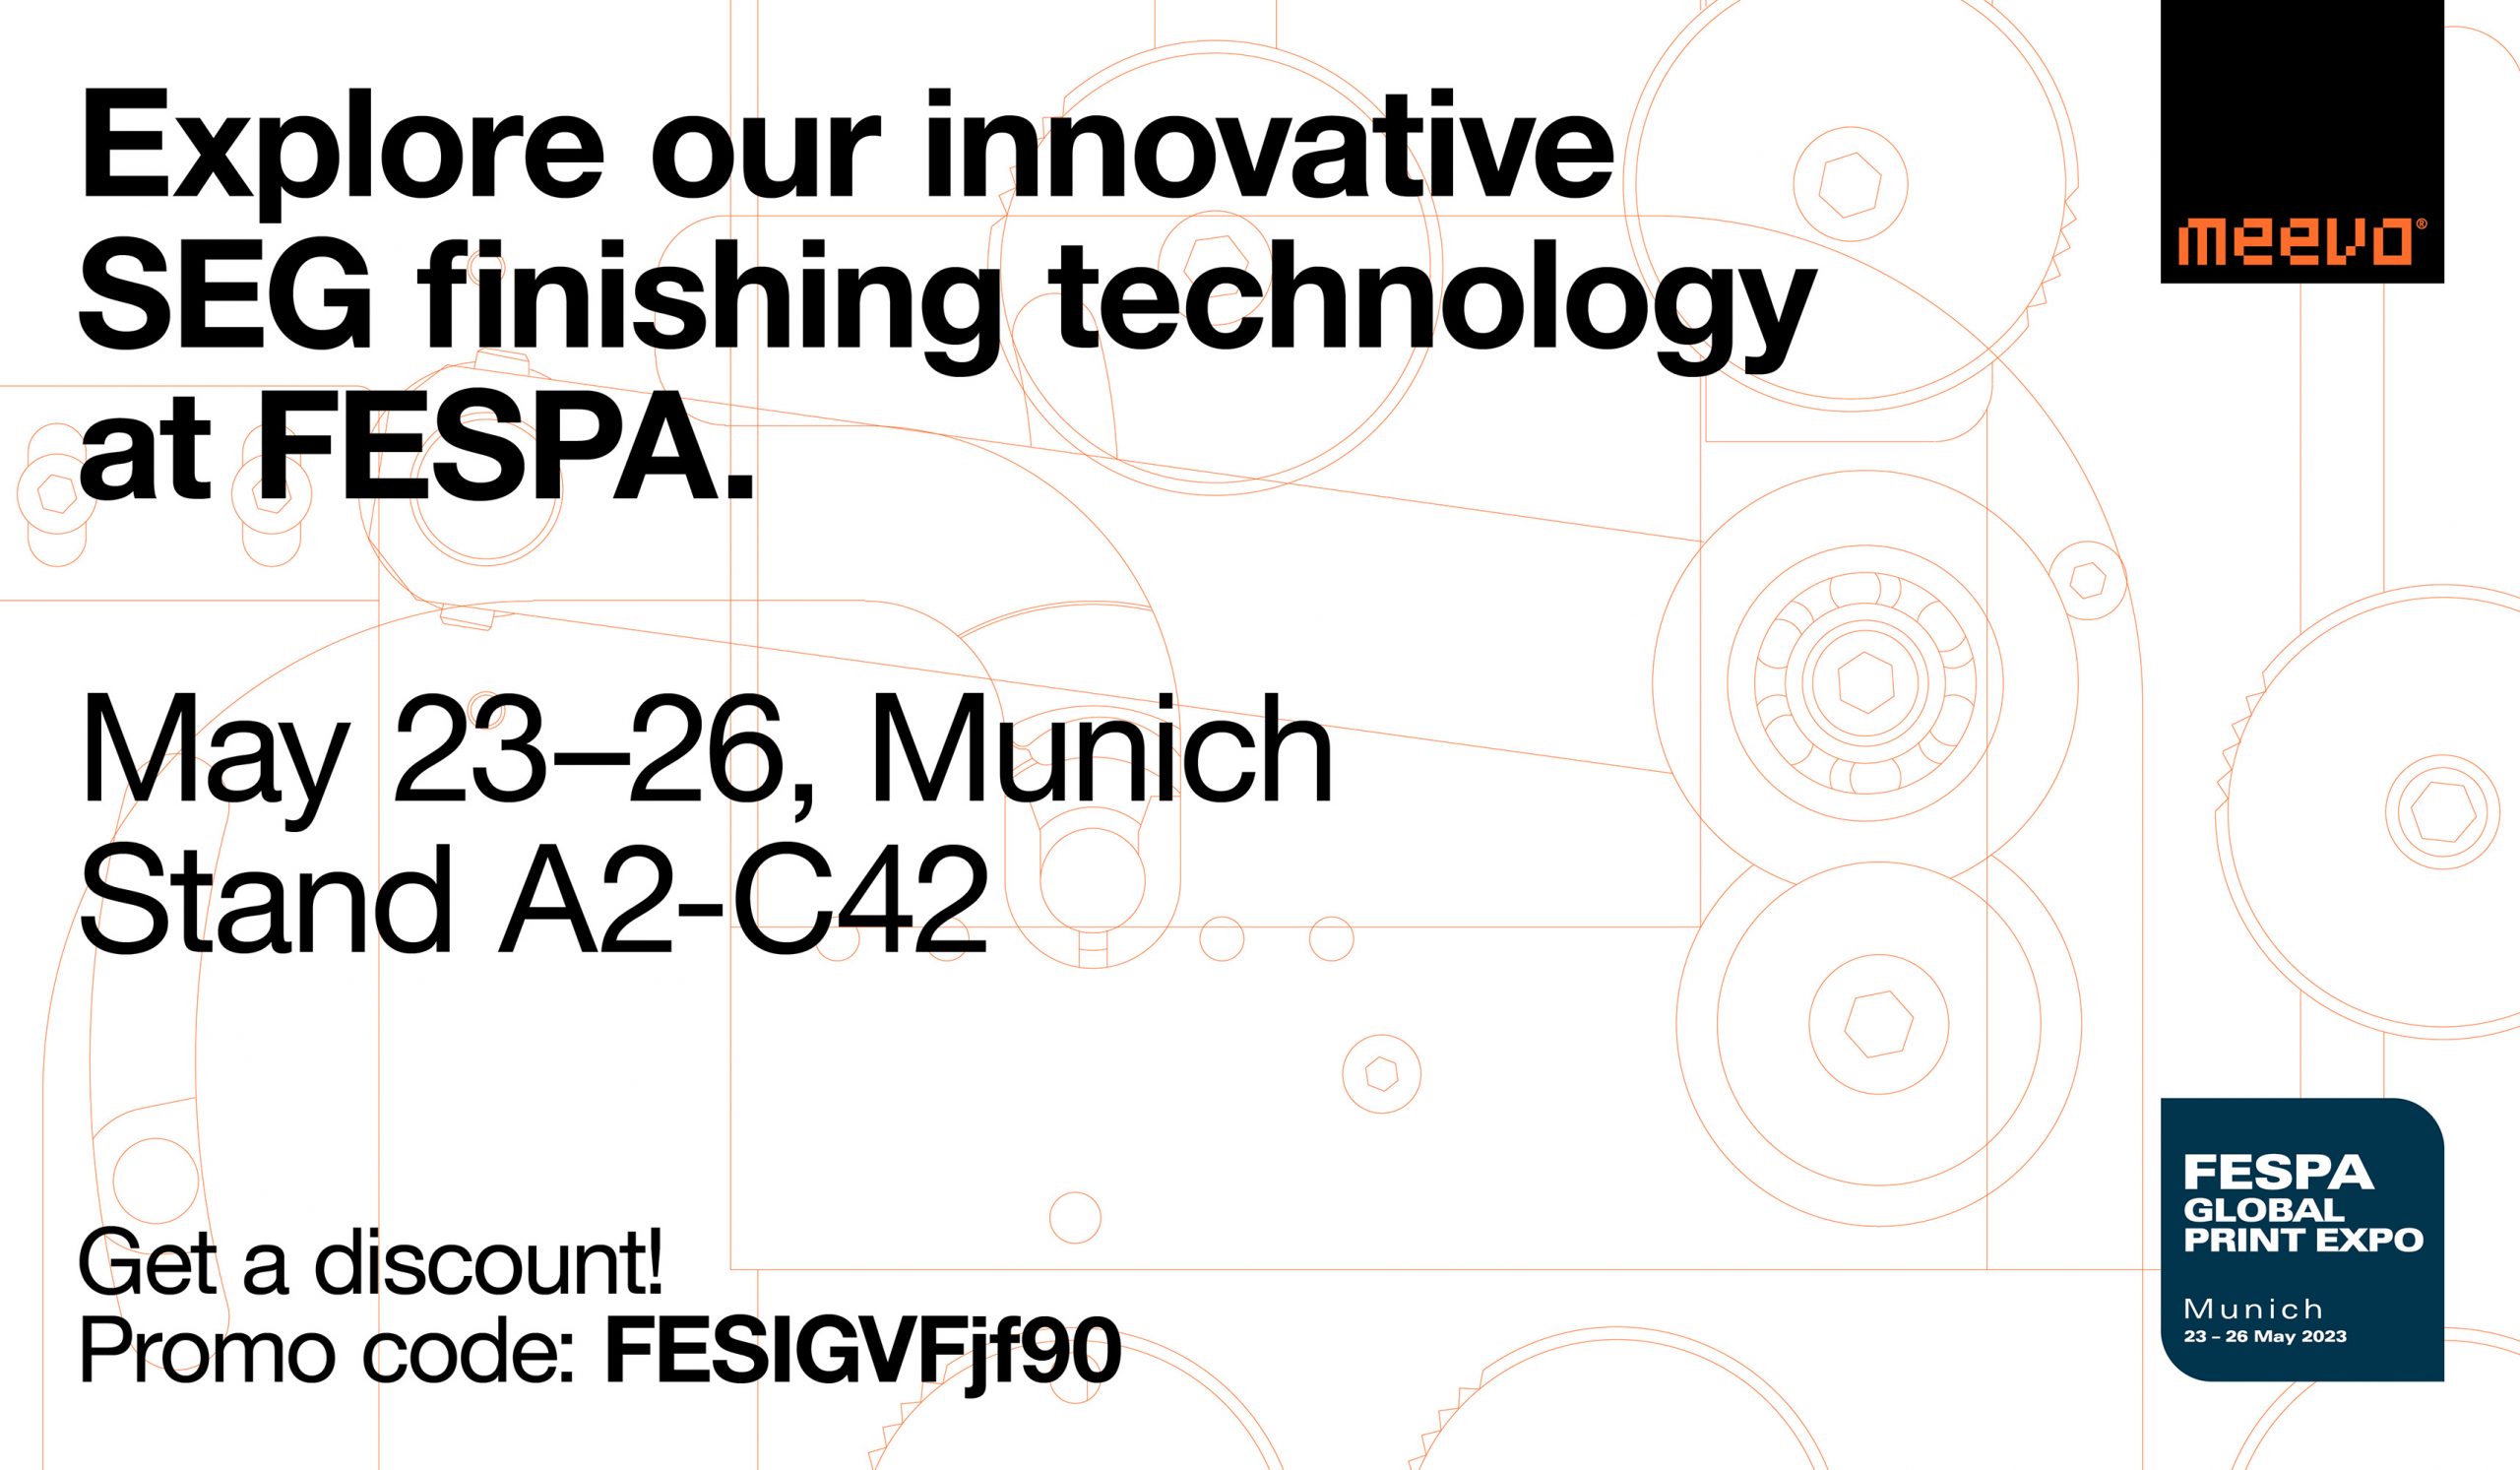 Explore our innovative SEG finishing technology at FESPA